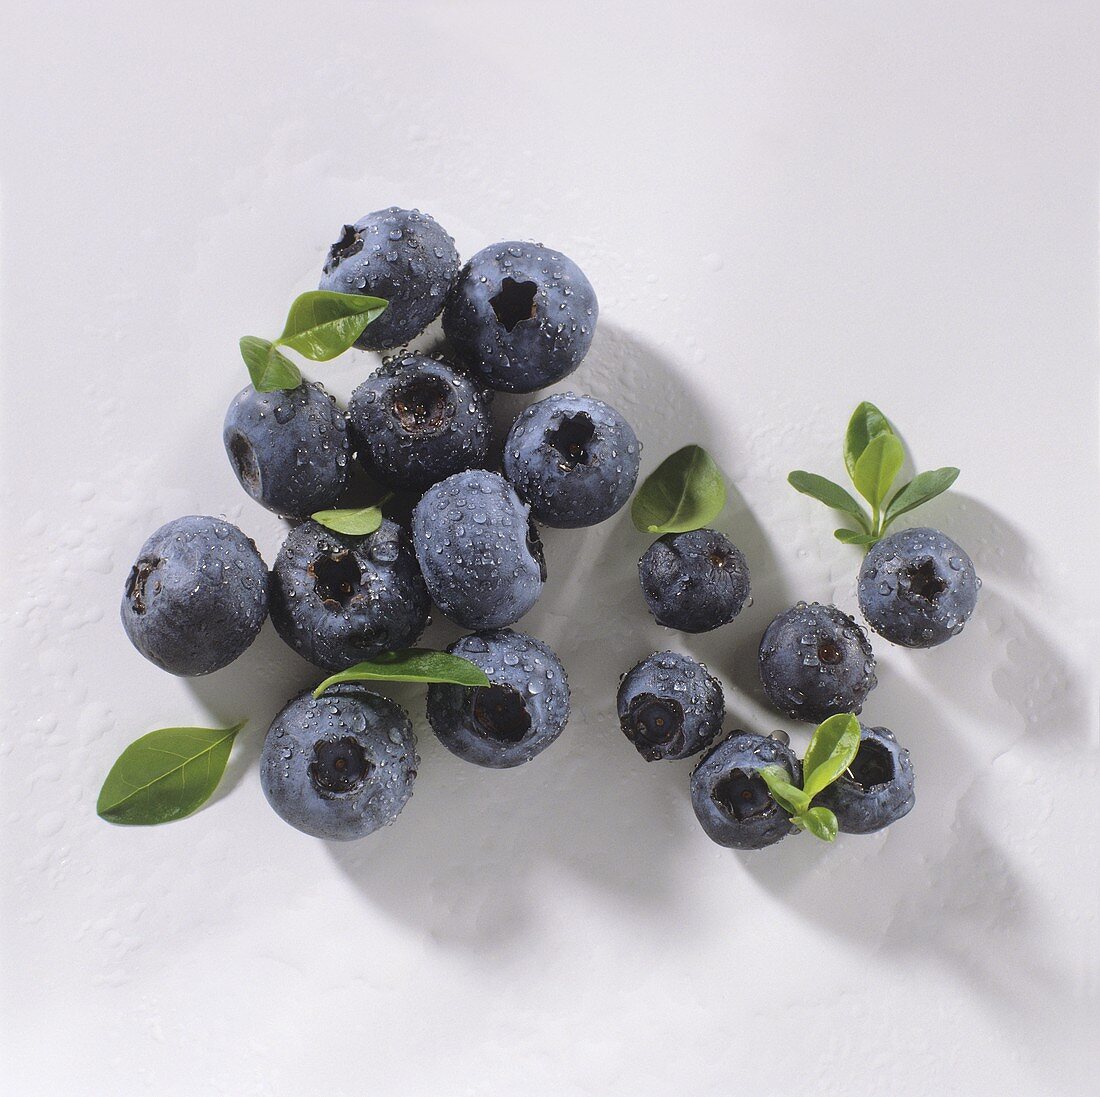 Freshly washed blueberries